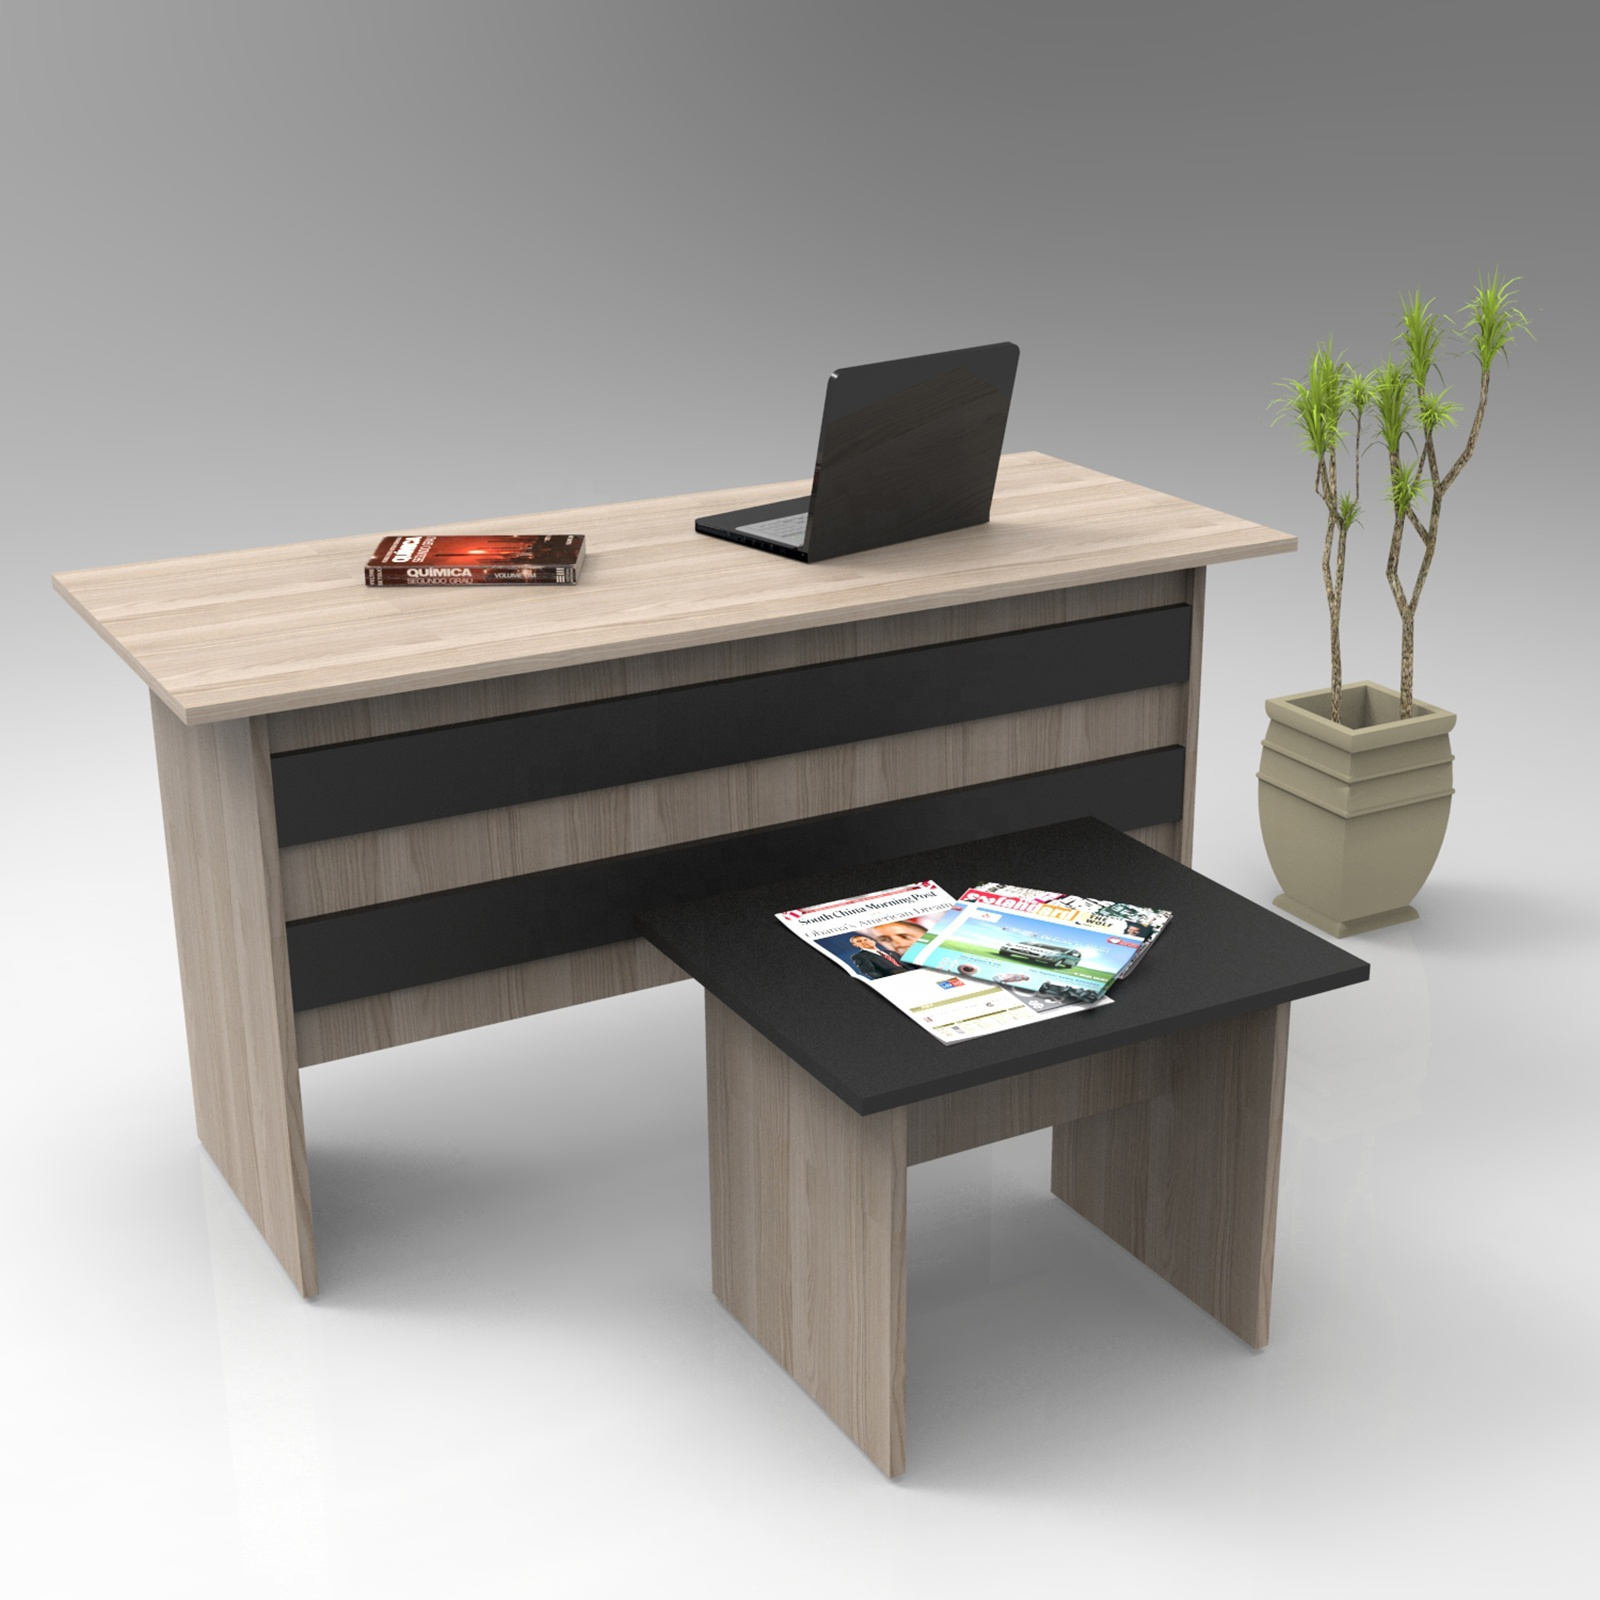 Yurudesign Wholesale Furniture Metal Frame Office Furniture Set with Desk Coffee Table